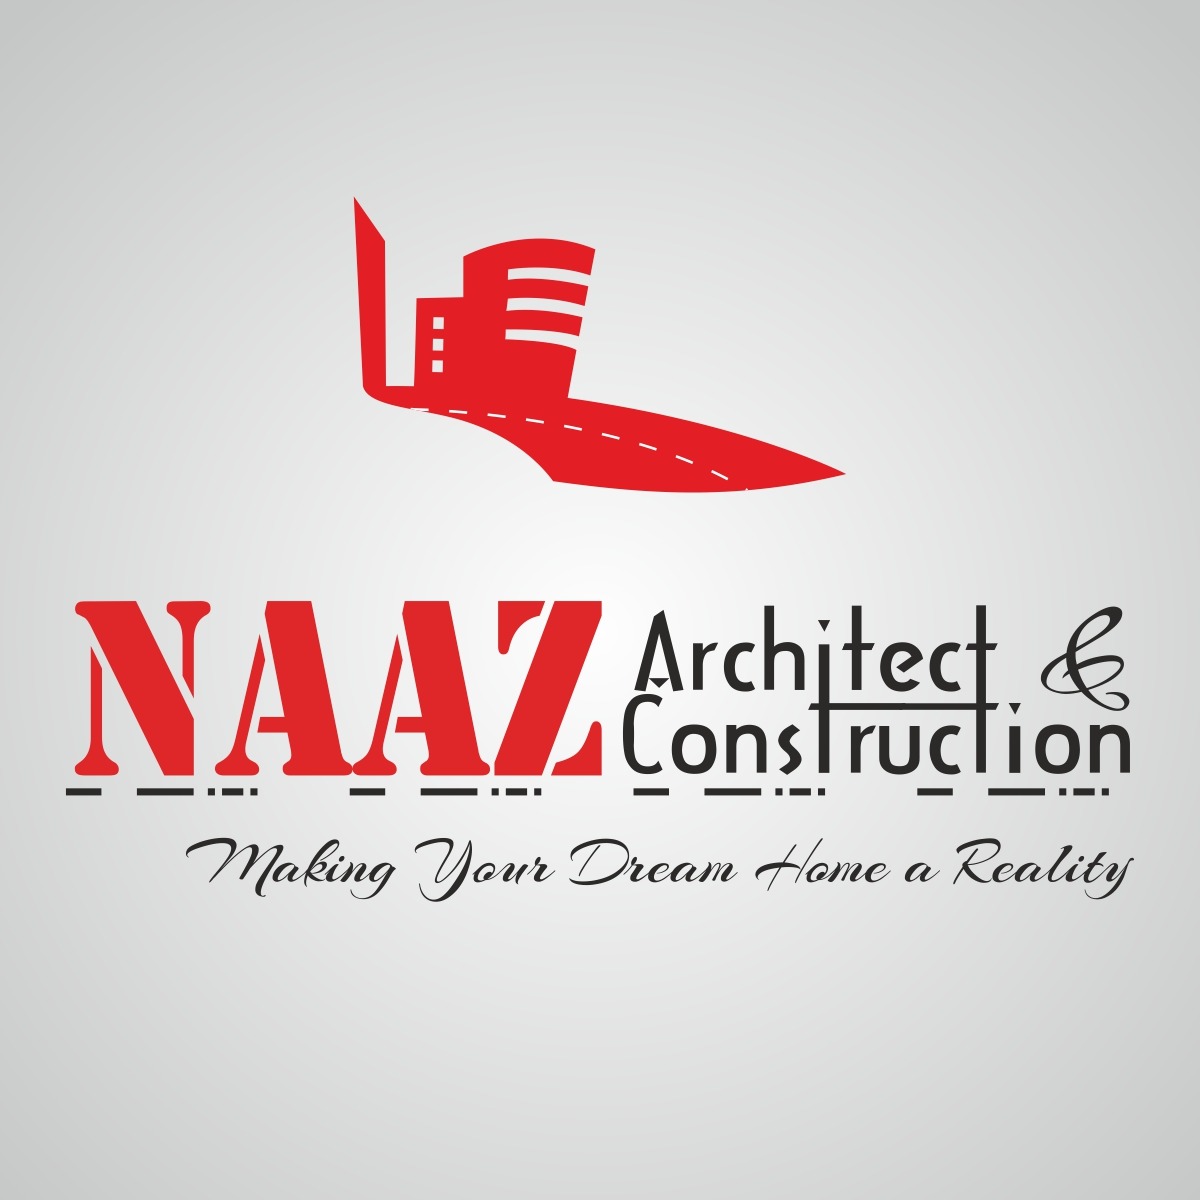 NAAZ Architect & Construction - Logo